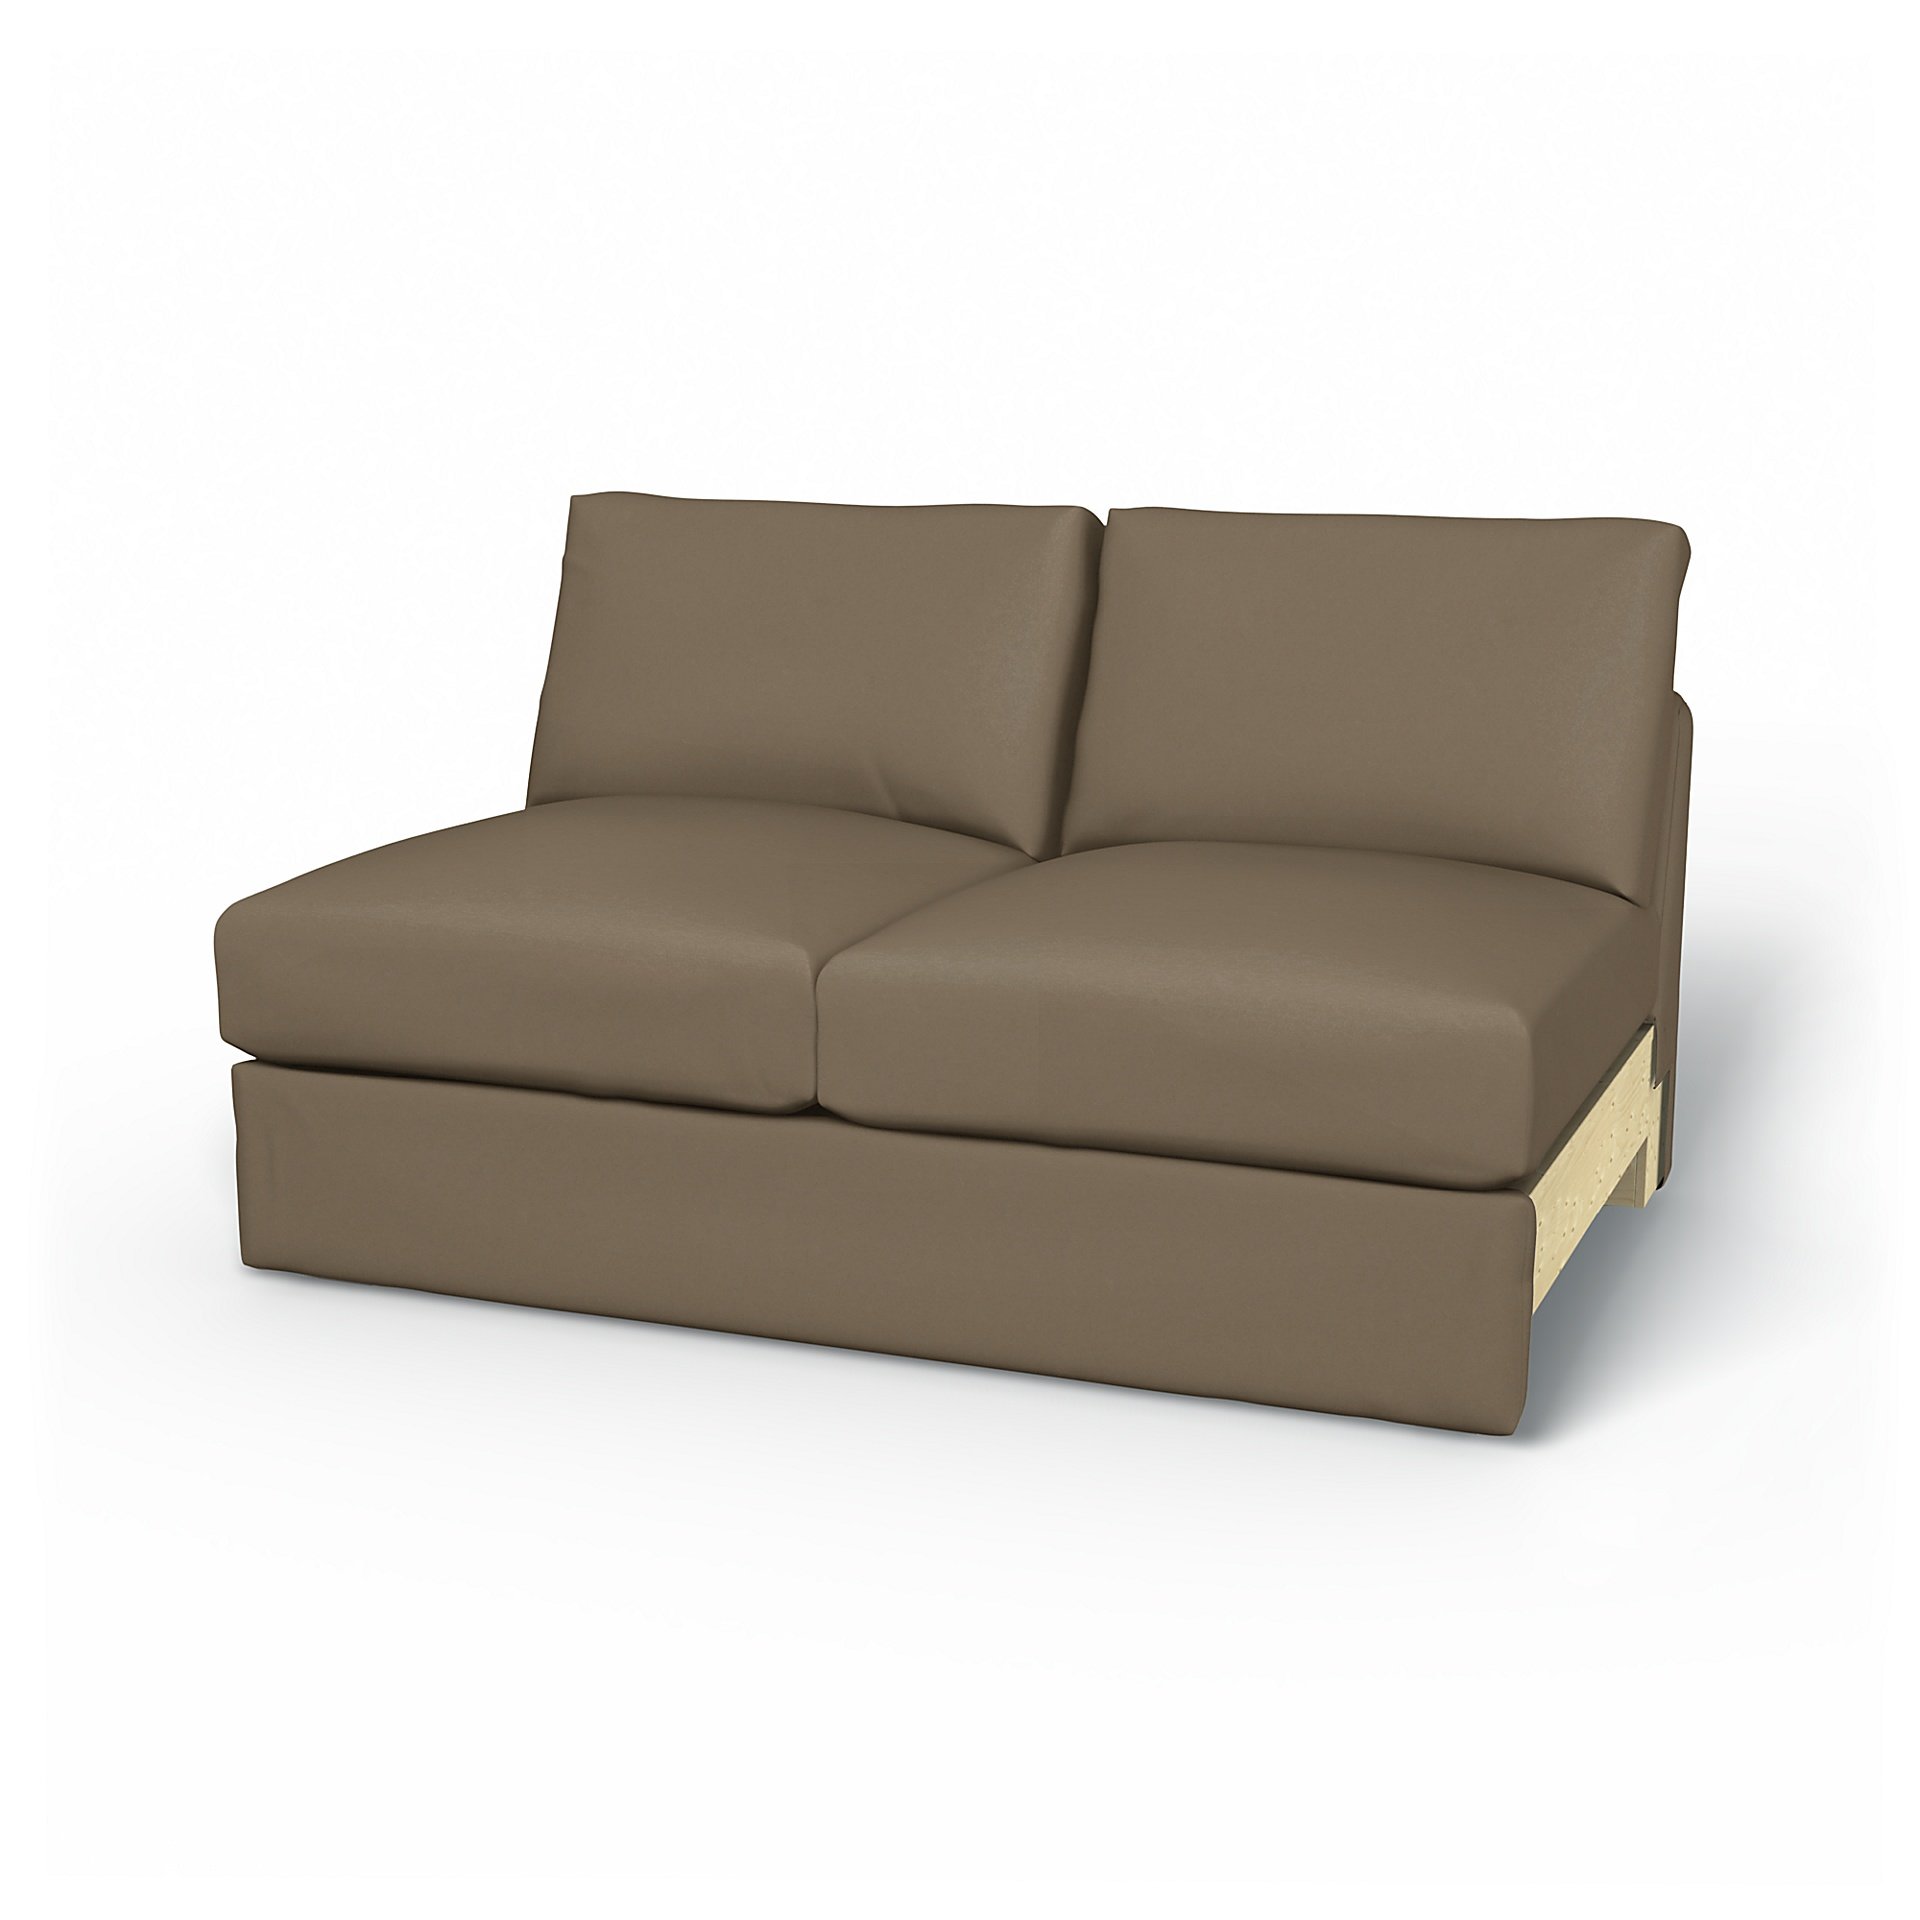 IKEA - Vimle 2 seater bed sofa without armrests, Taupe, Velvet - Bemz